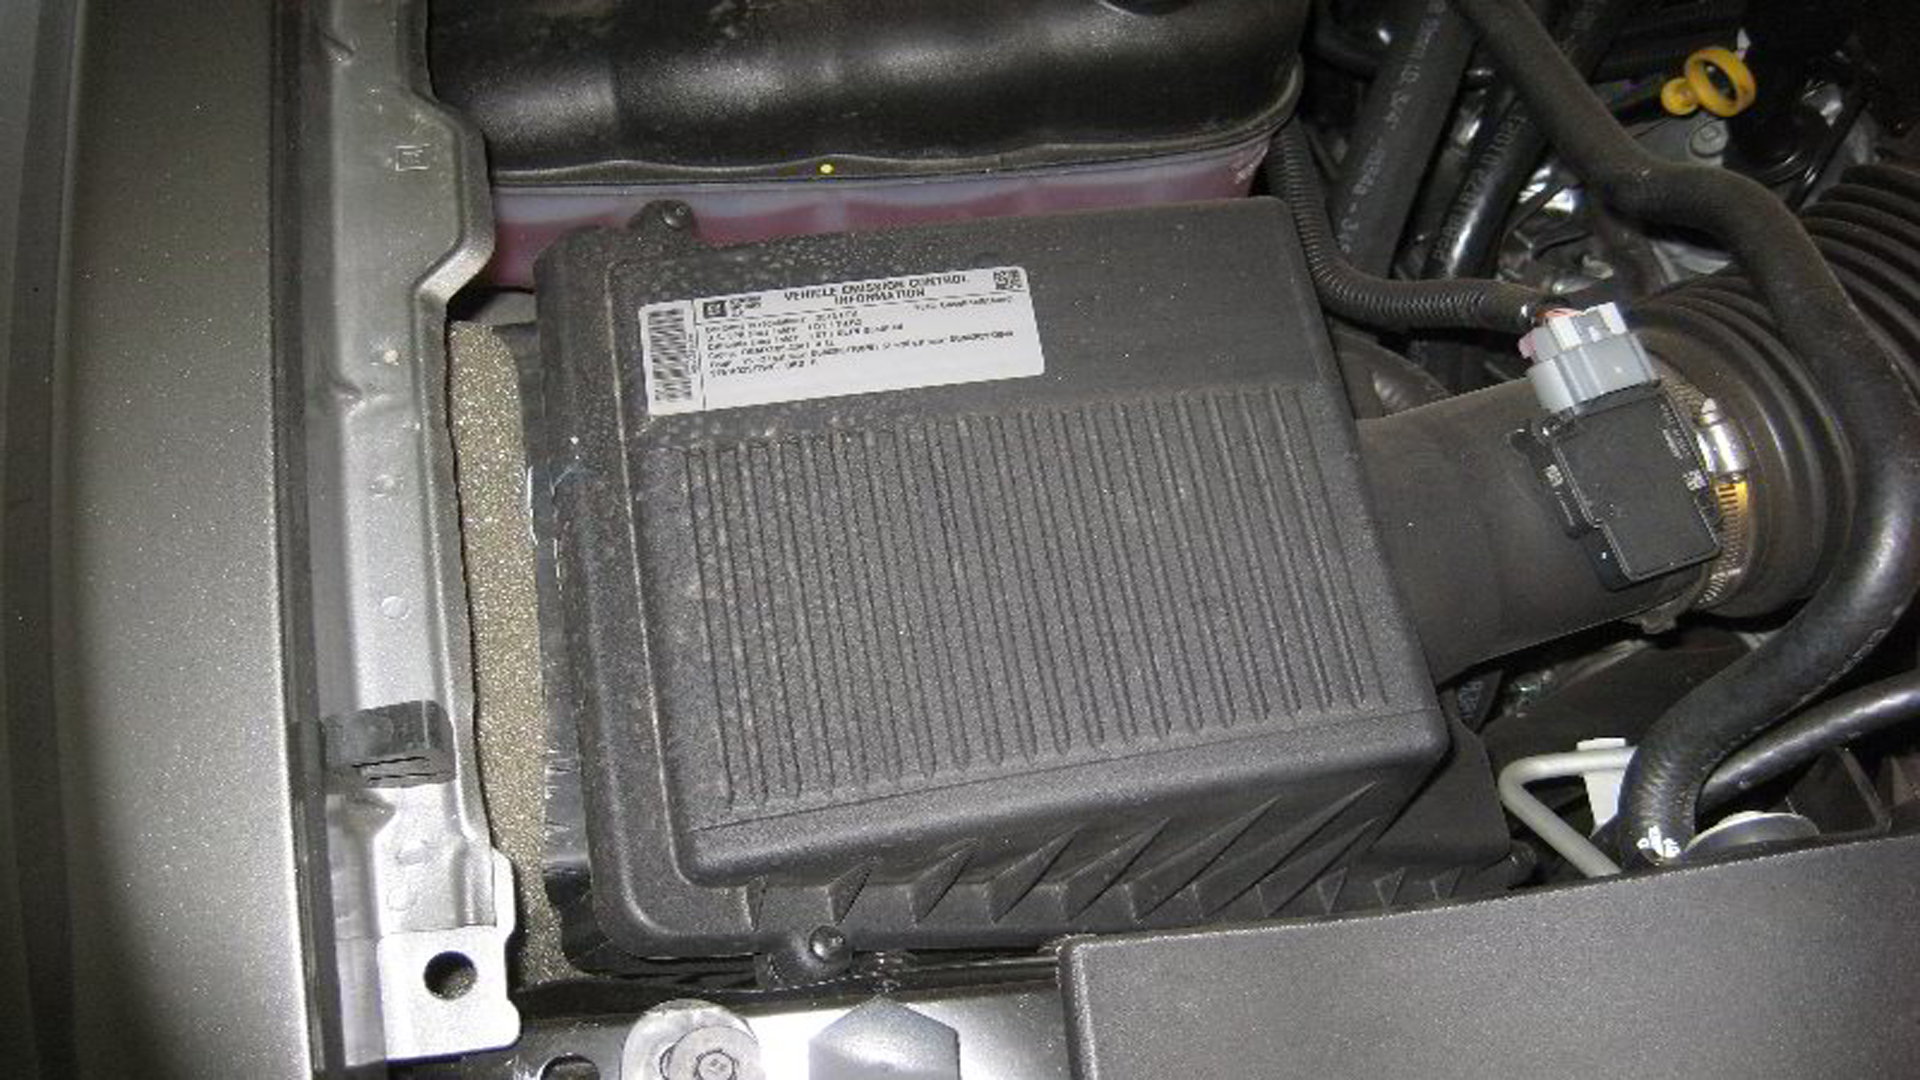 Chevrolet Silverado 1999-2006: How to Replace Engine Air Filter